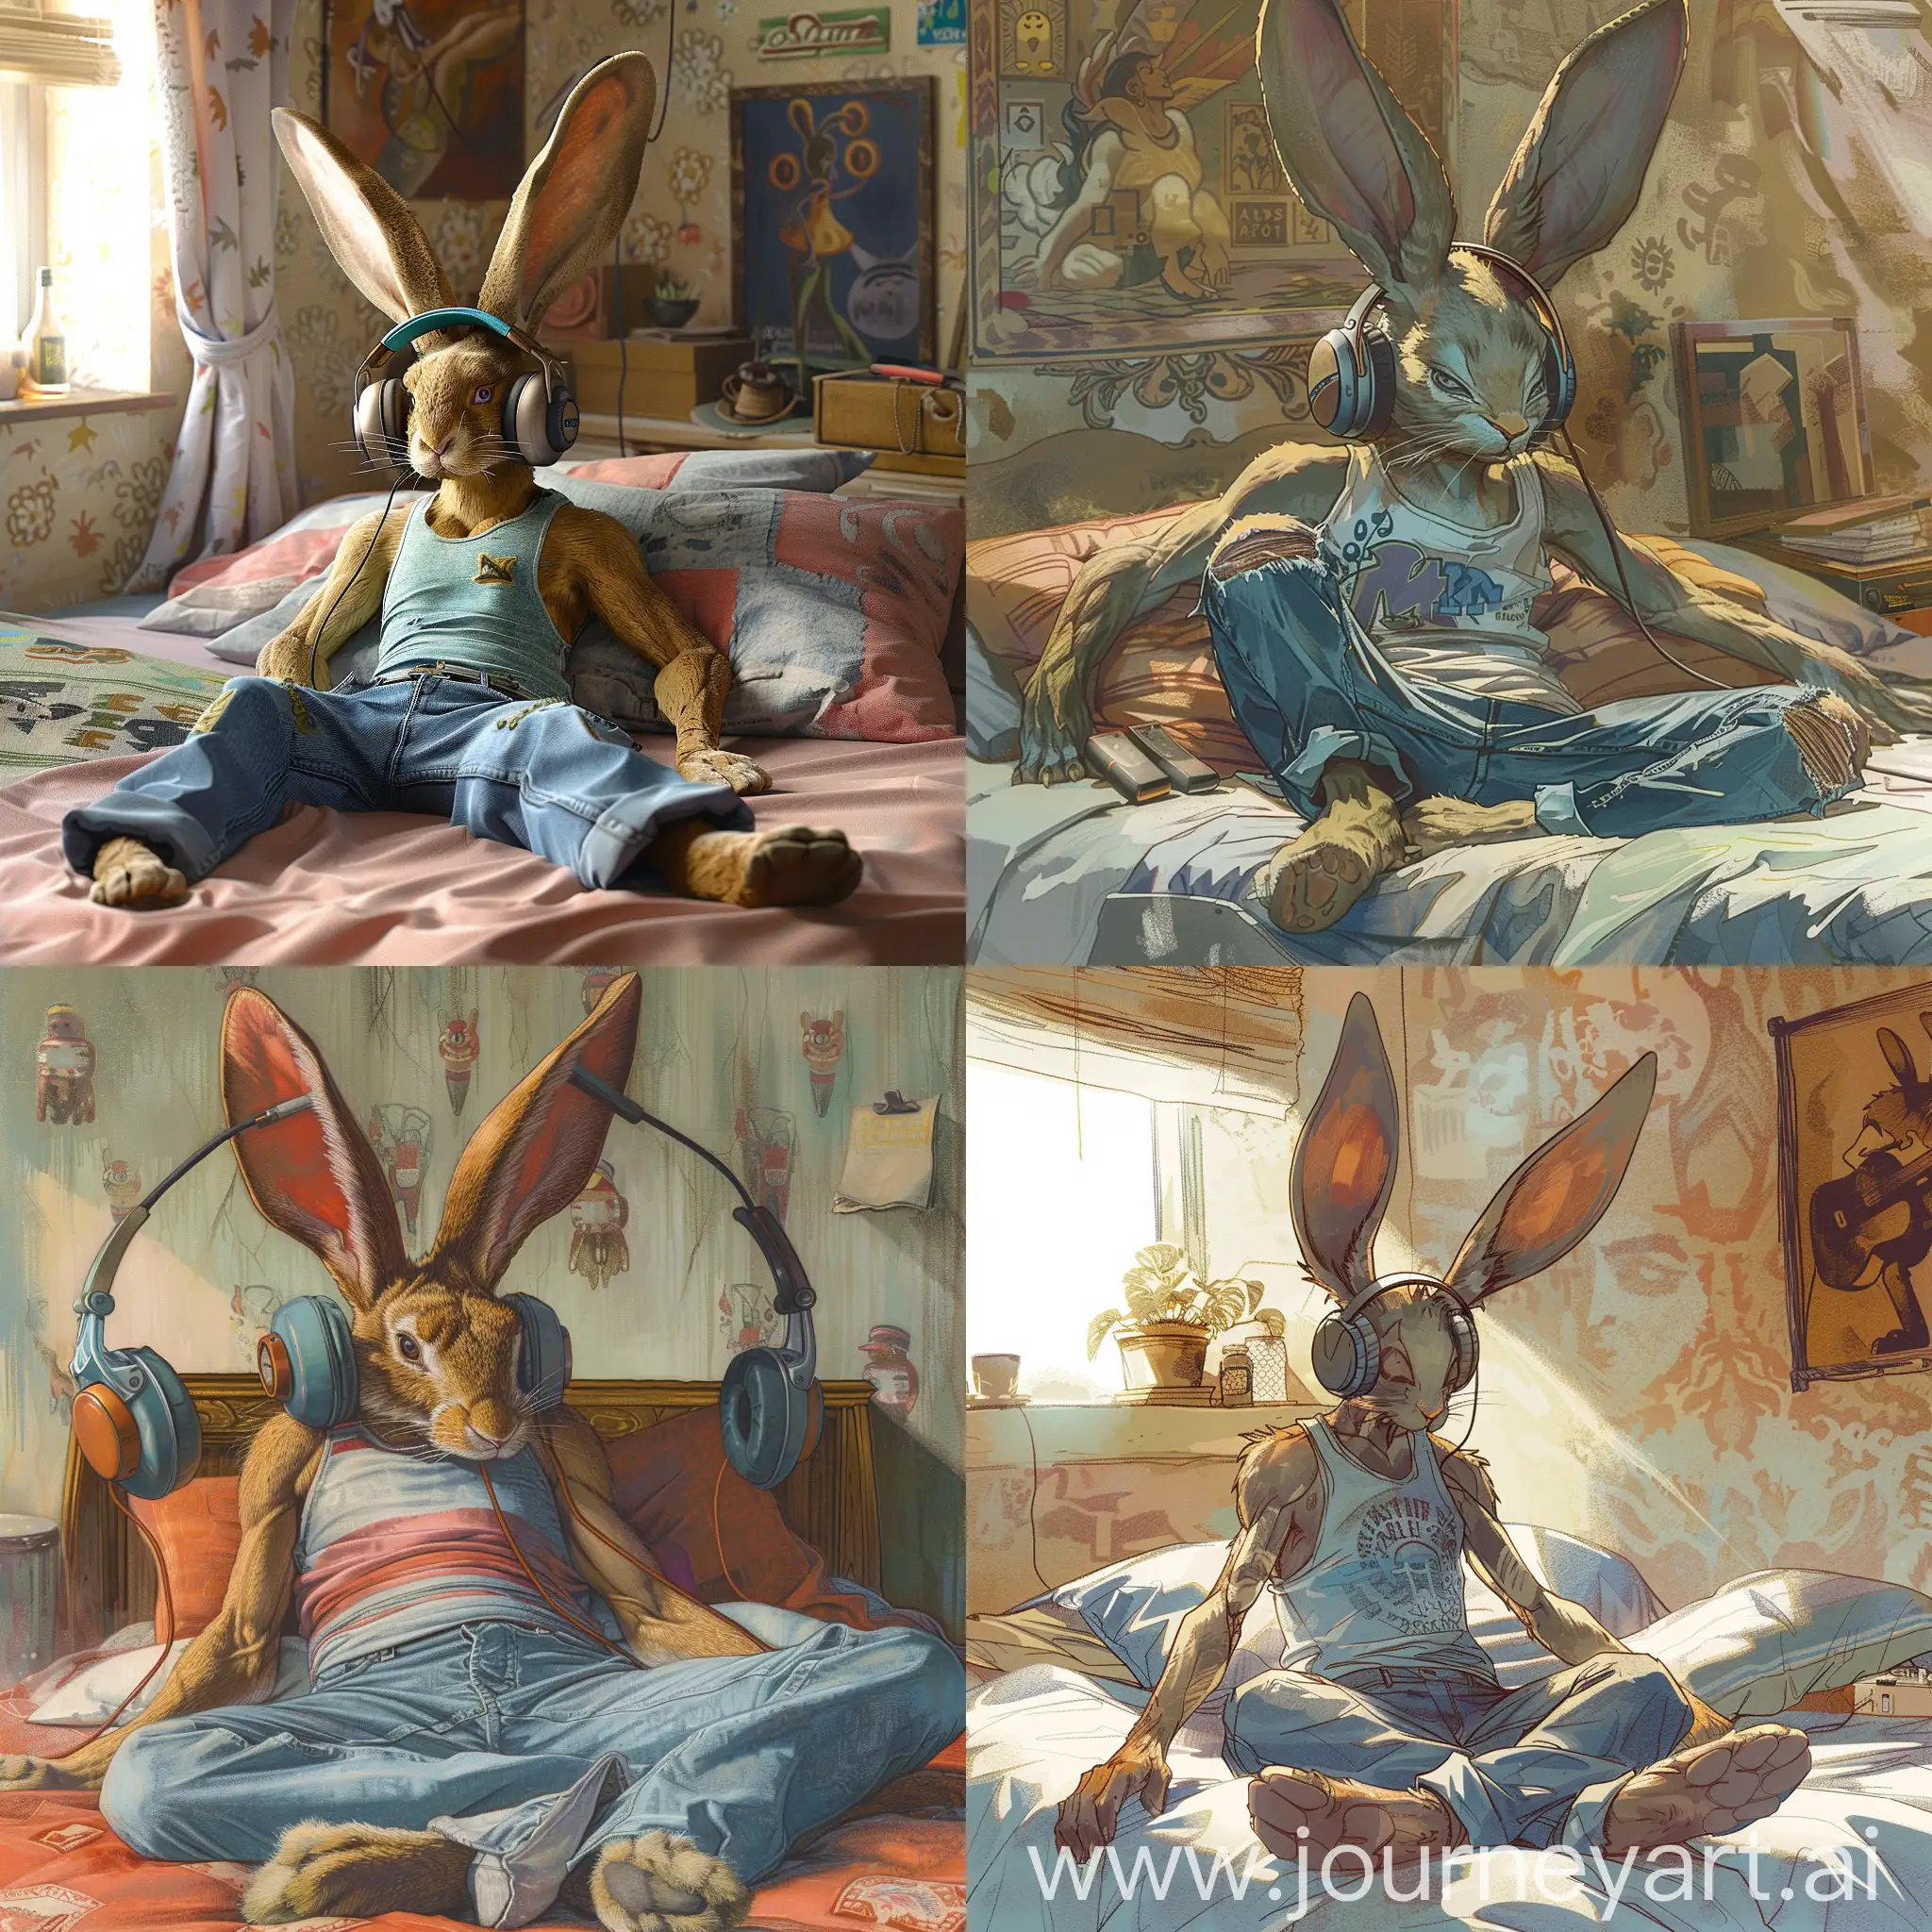 Whimsical-Rabbit-Humanoid-Enjoying-80s-Music-on-Bed